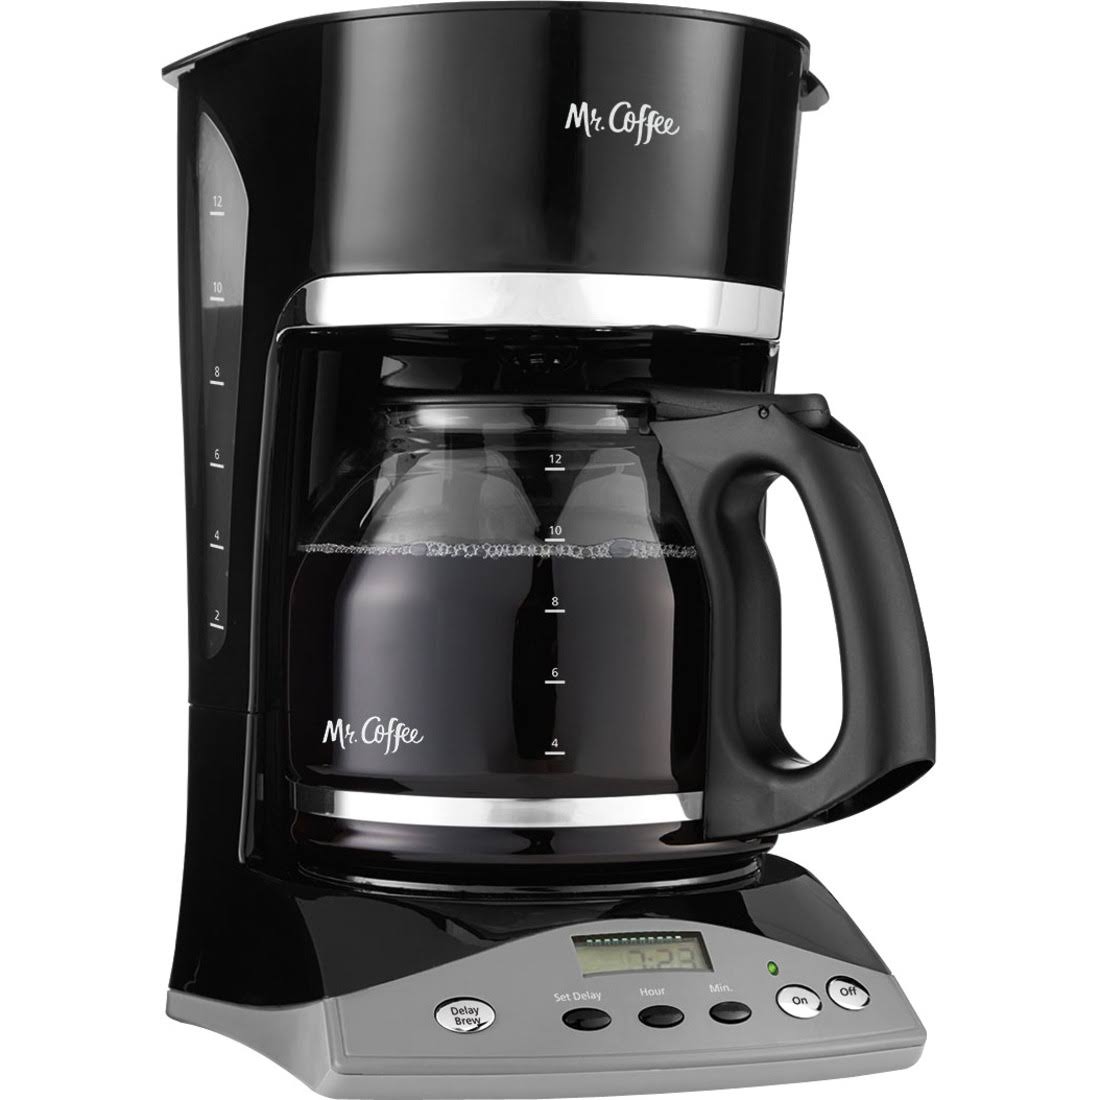 Mr. Coffee Skx23 12 Cup Programmable Coffeemaker - Black